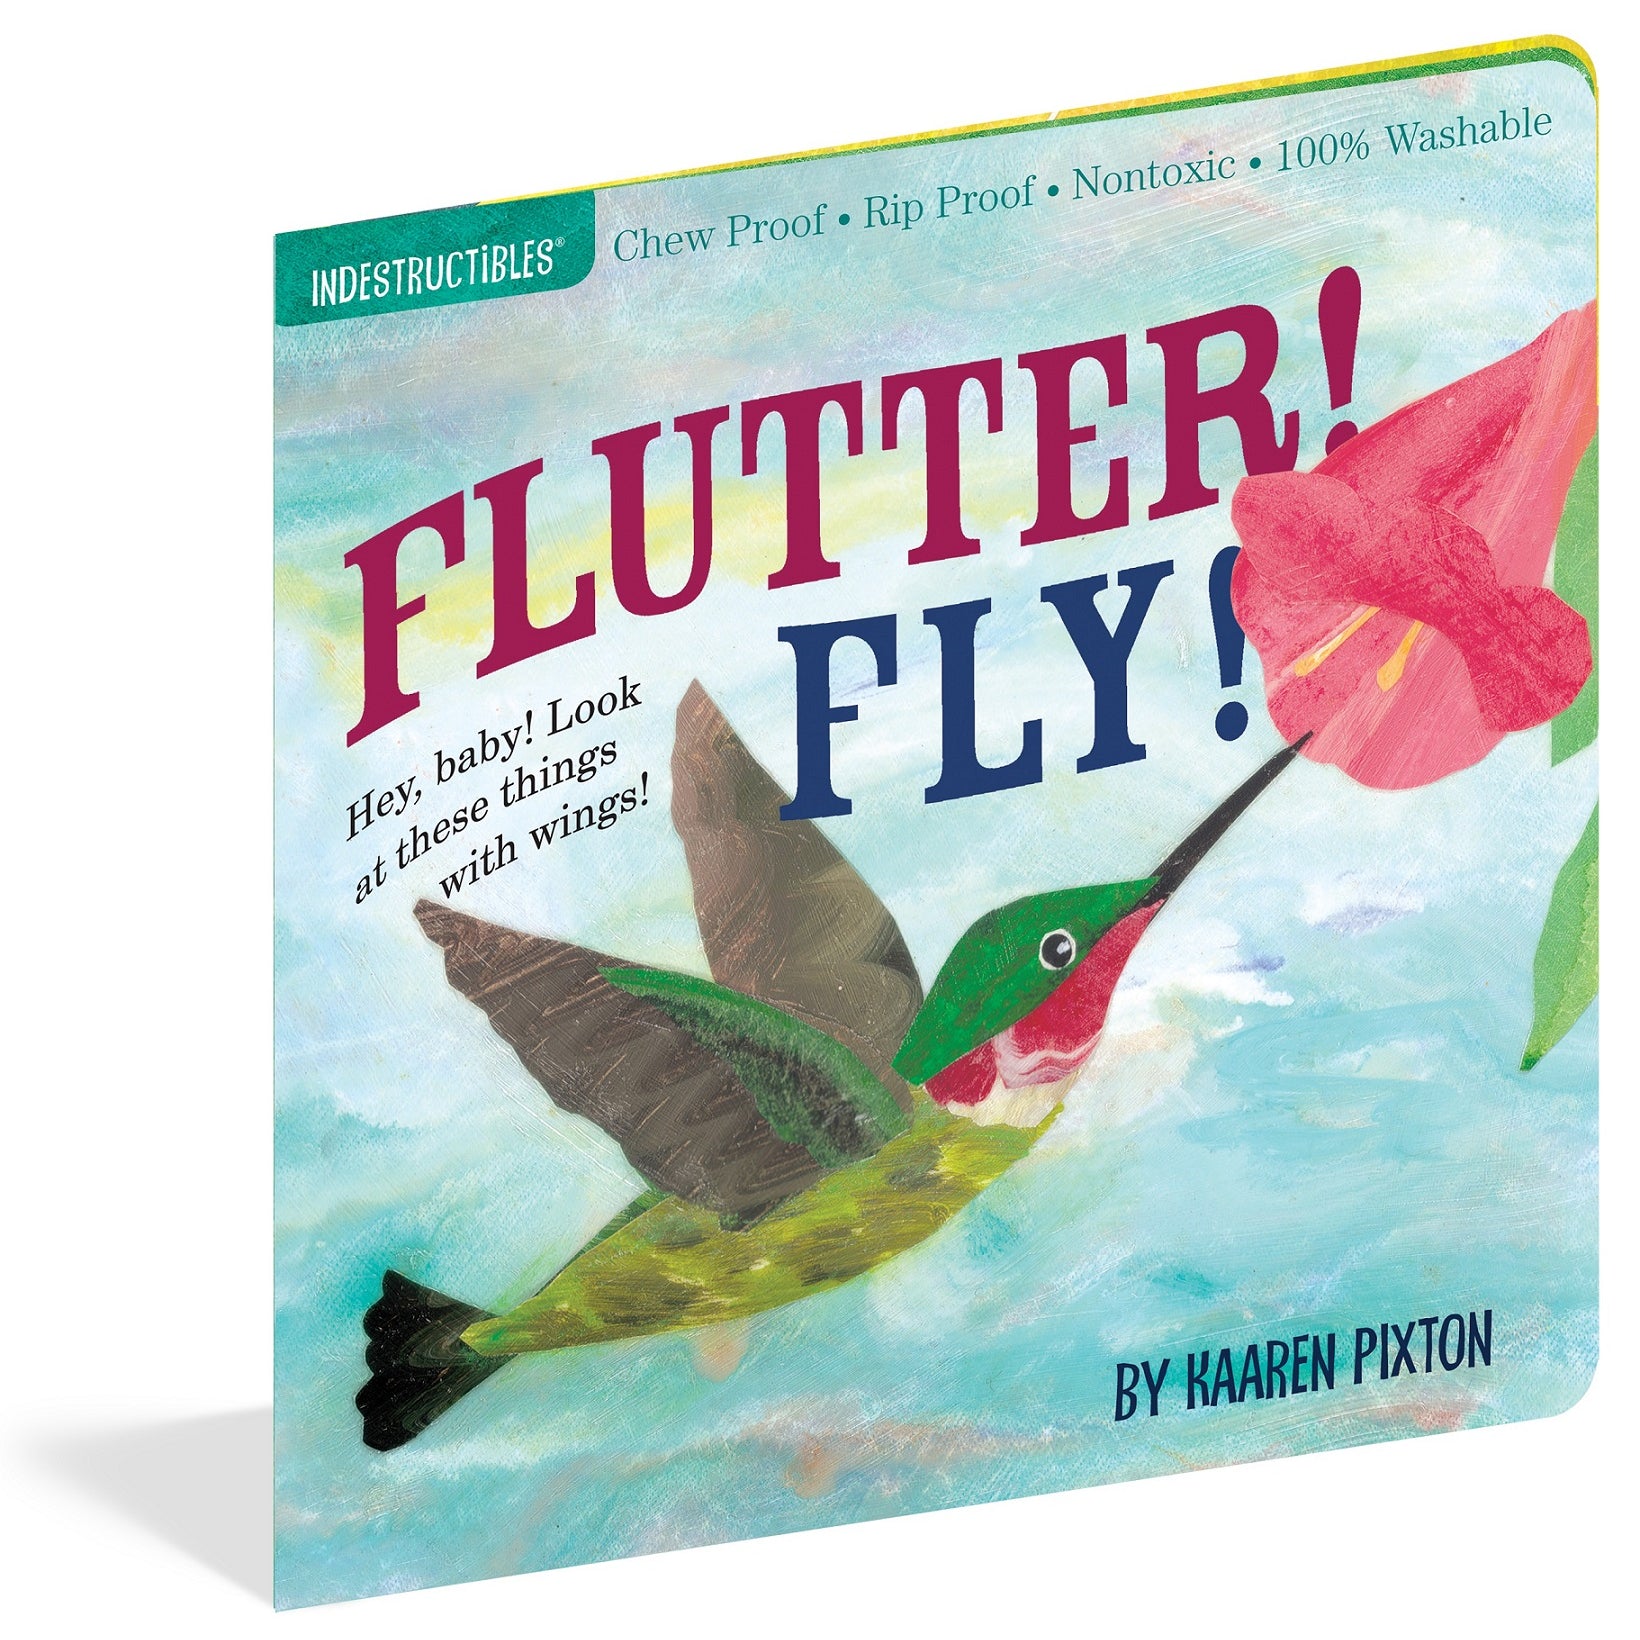 Indestructibles! Flutter! Fly! Book uniq